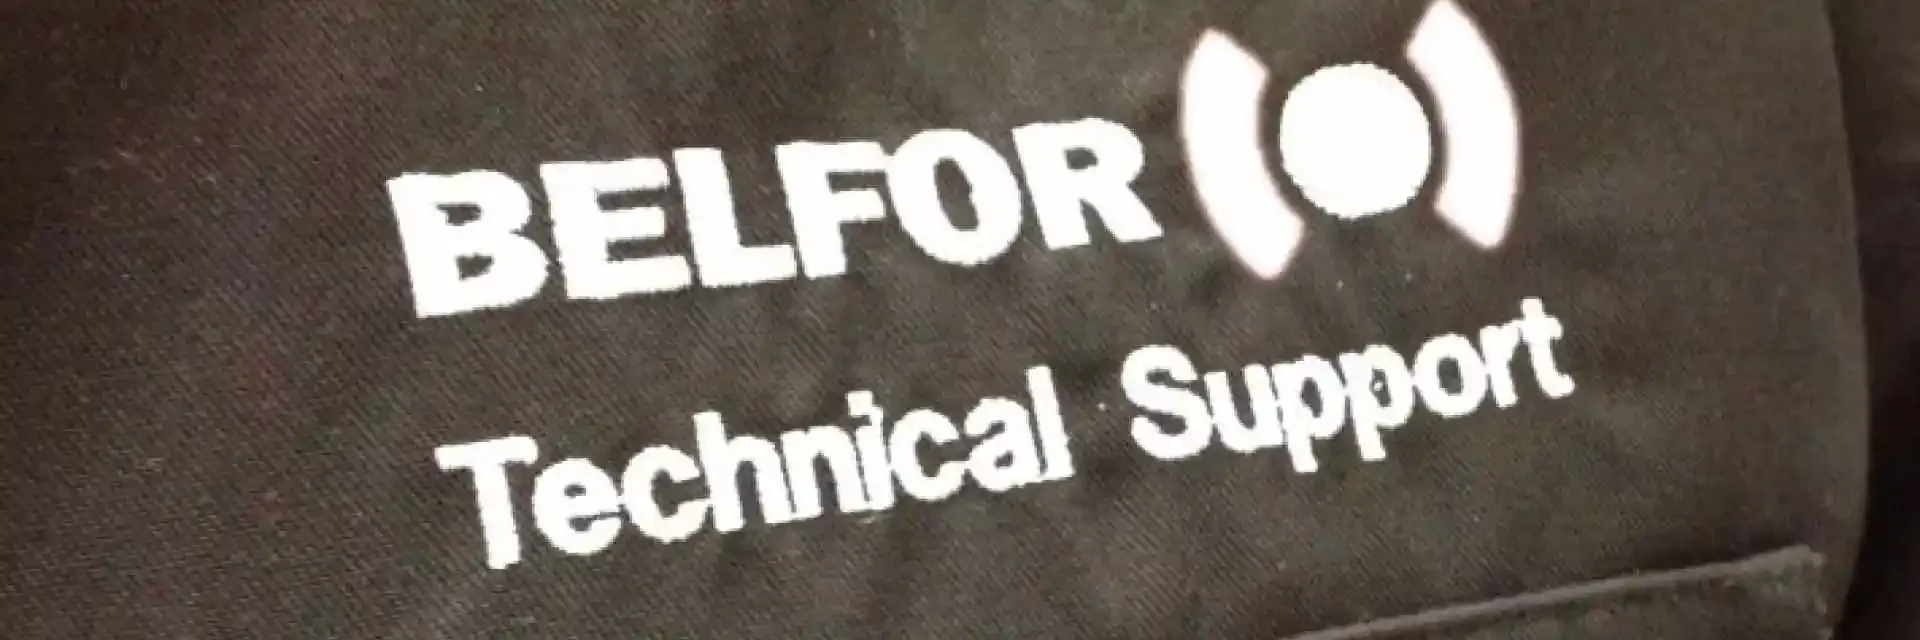 BELFOR technical support logo